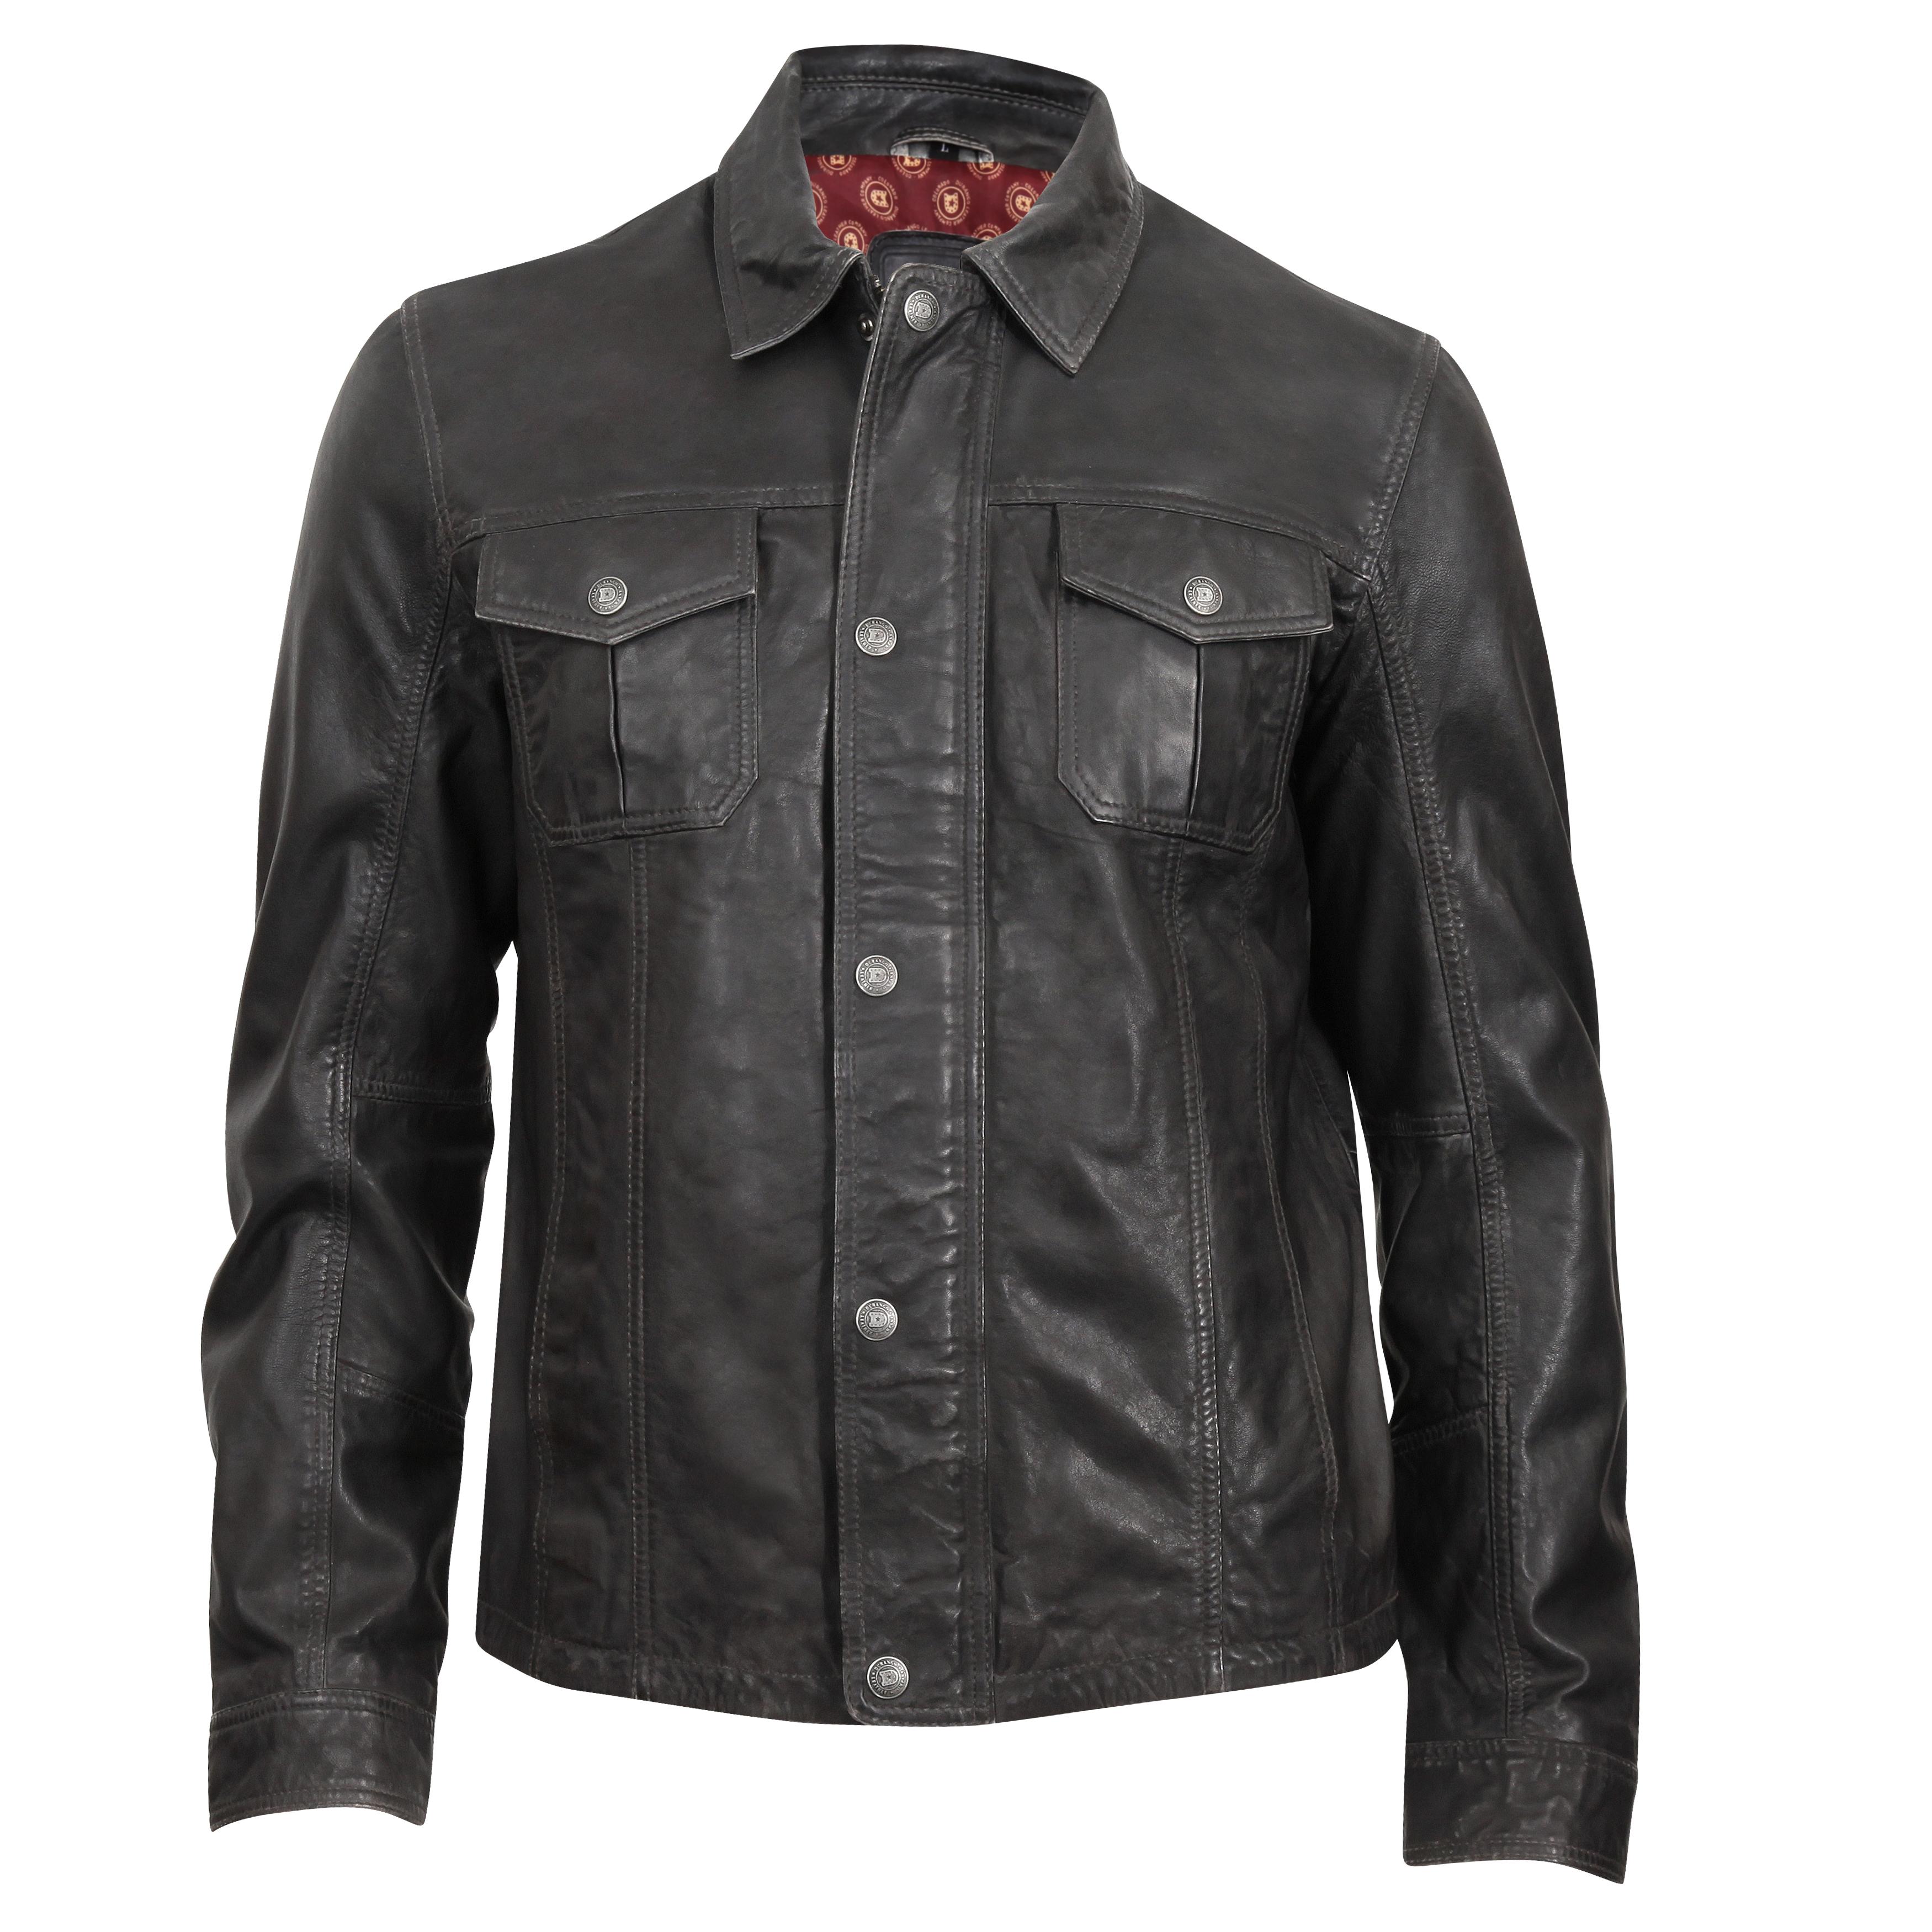 Durango Leather Company Cow Puncher Jacket, DLC0047